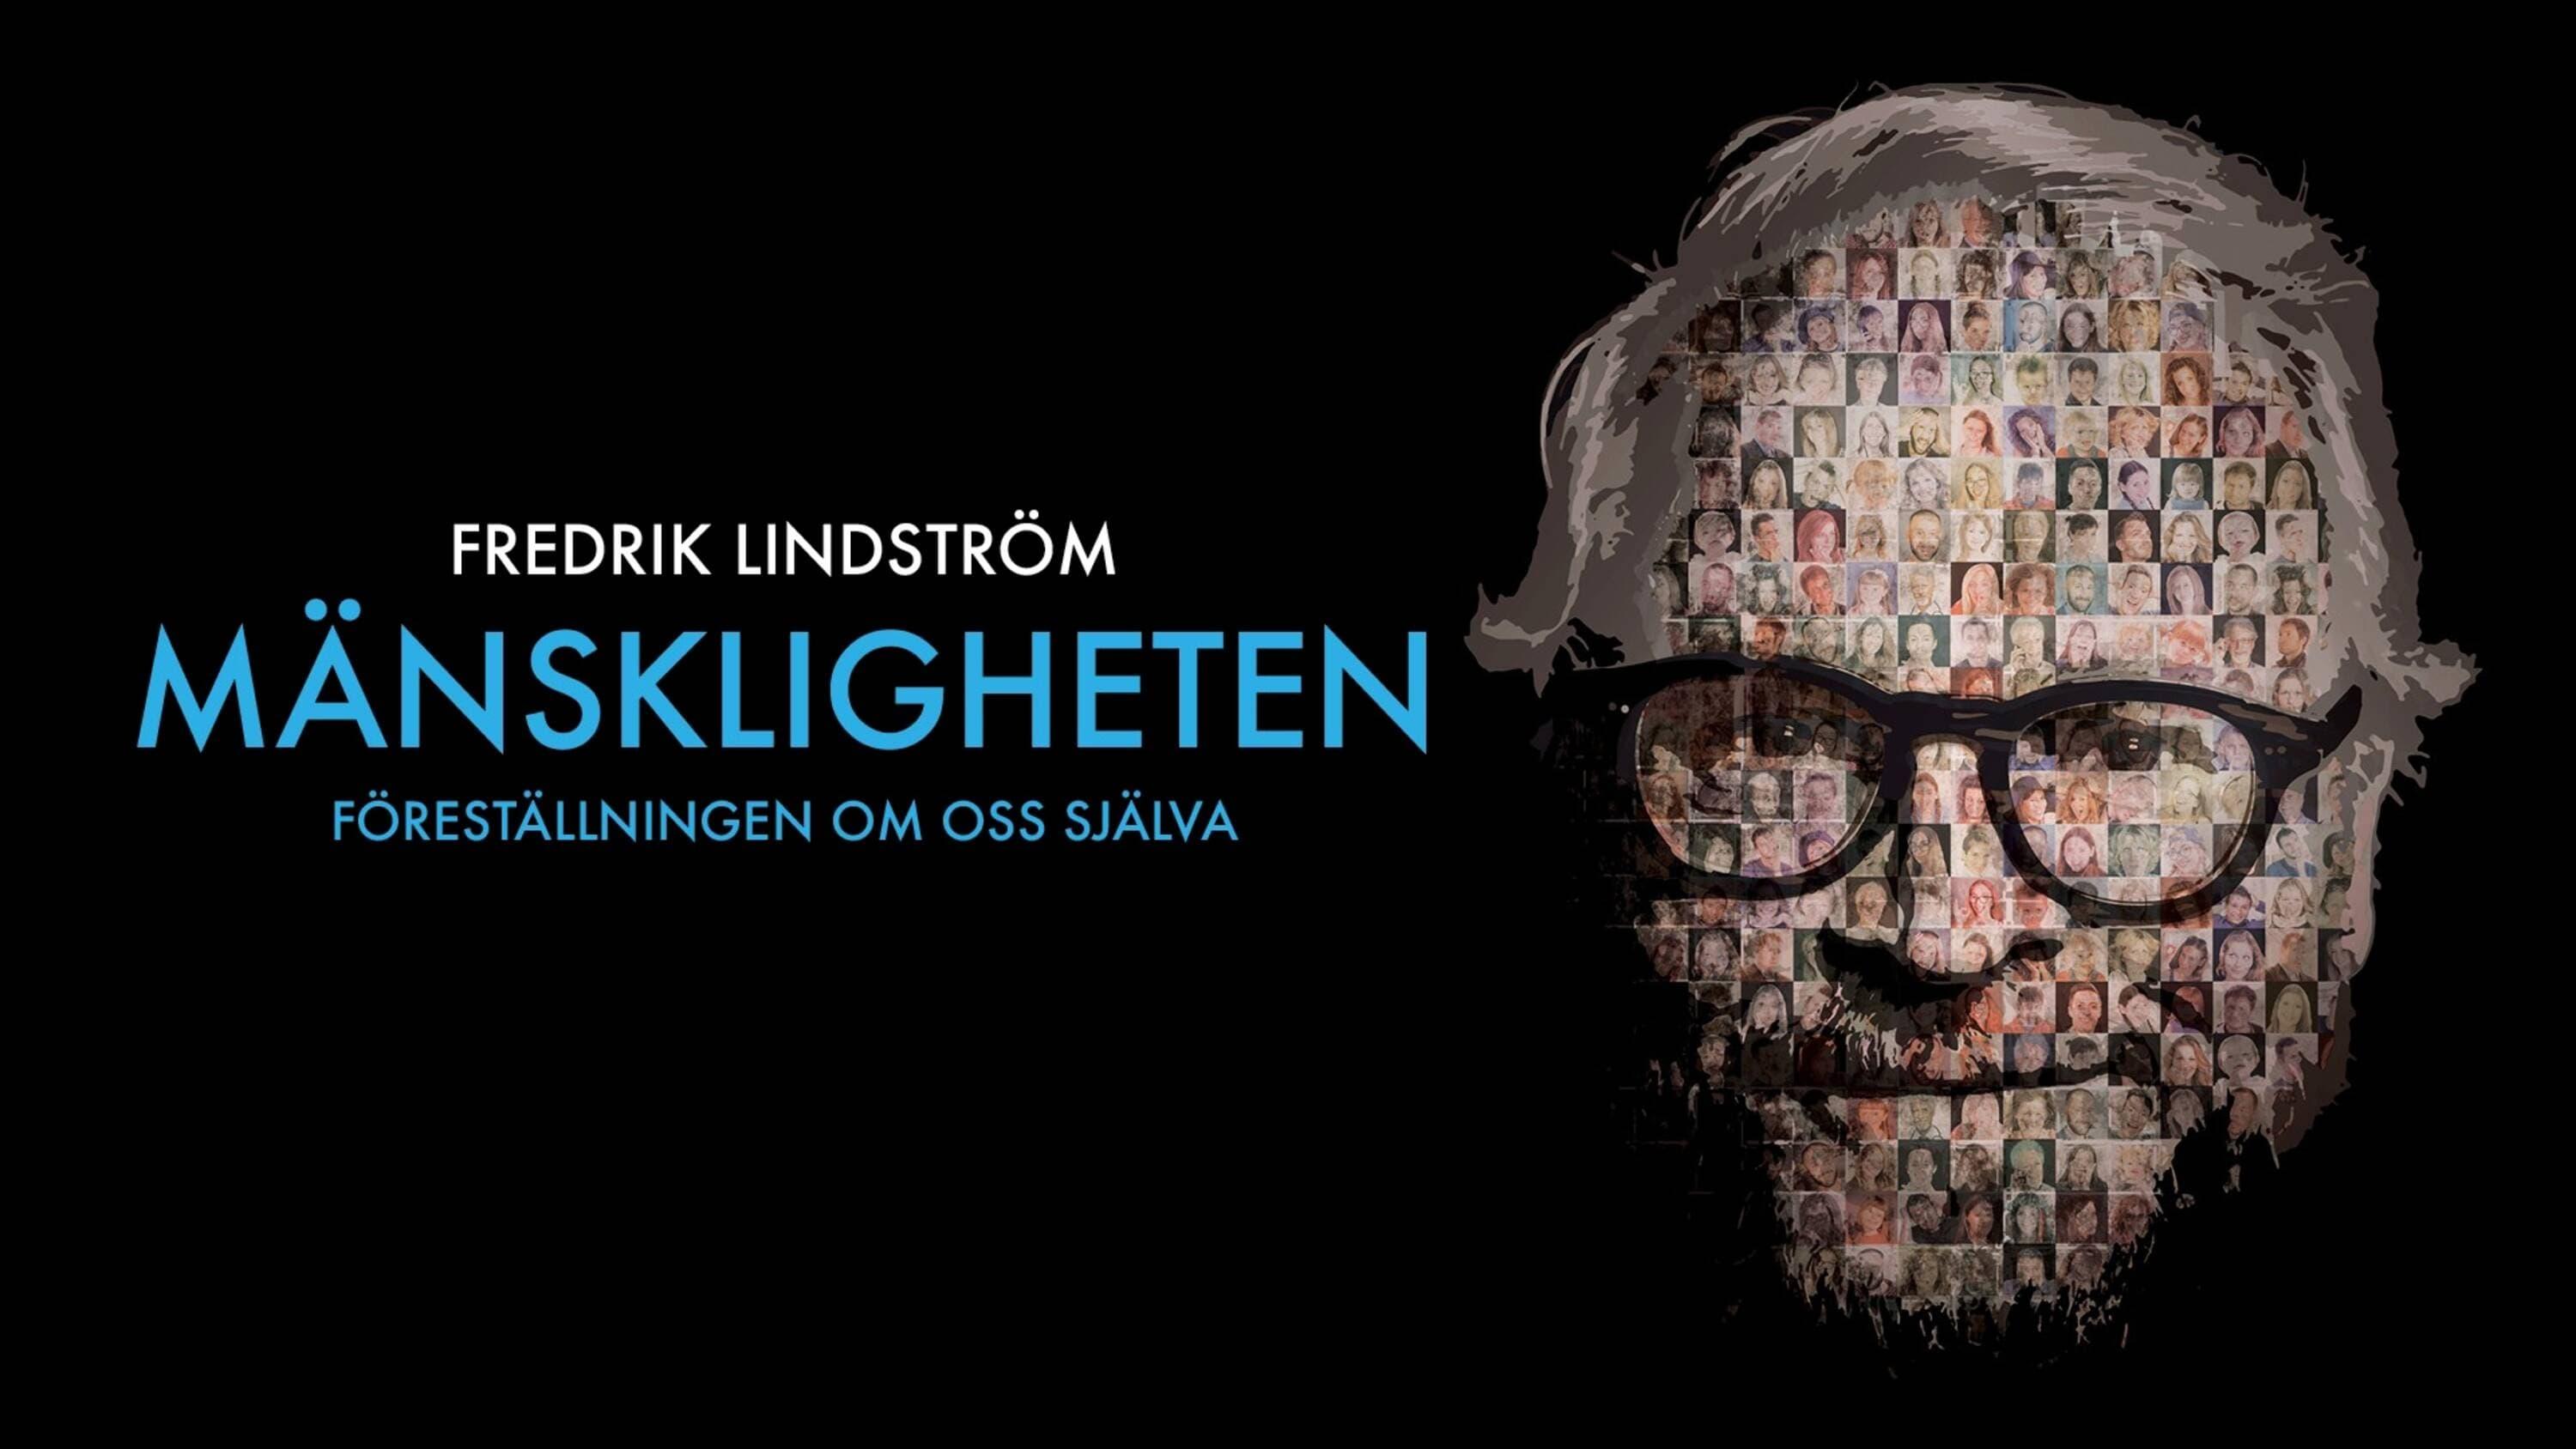 Fredrik Lindström backdrop